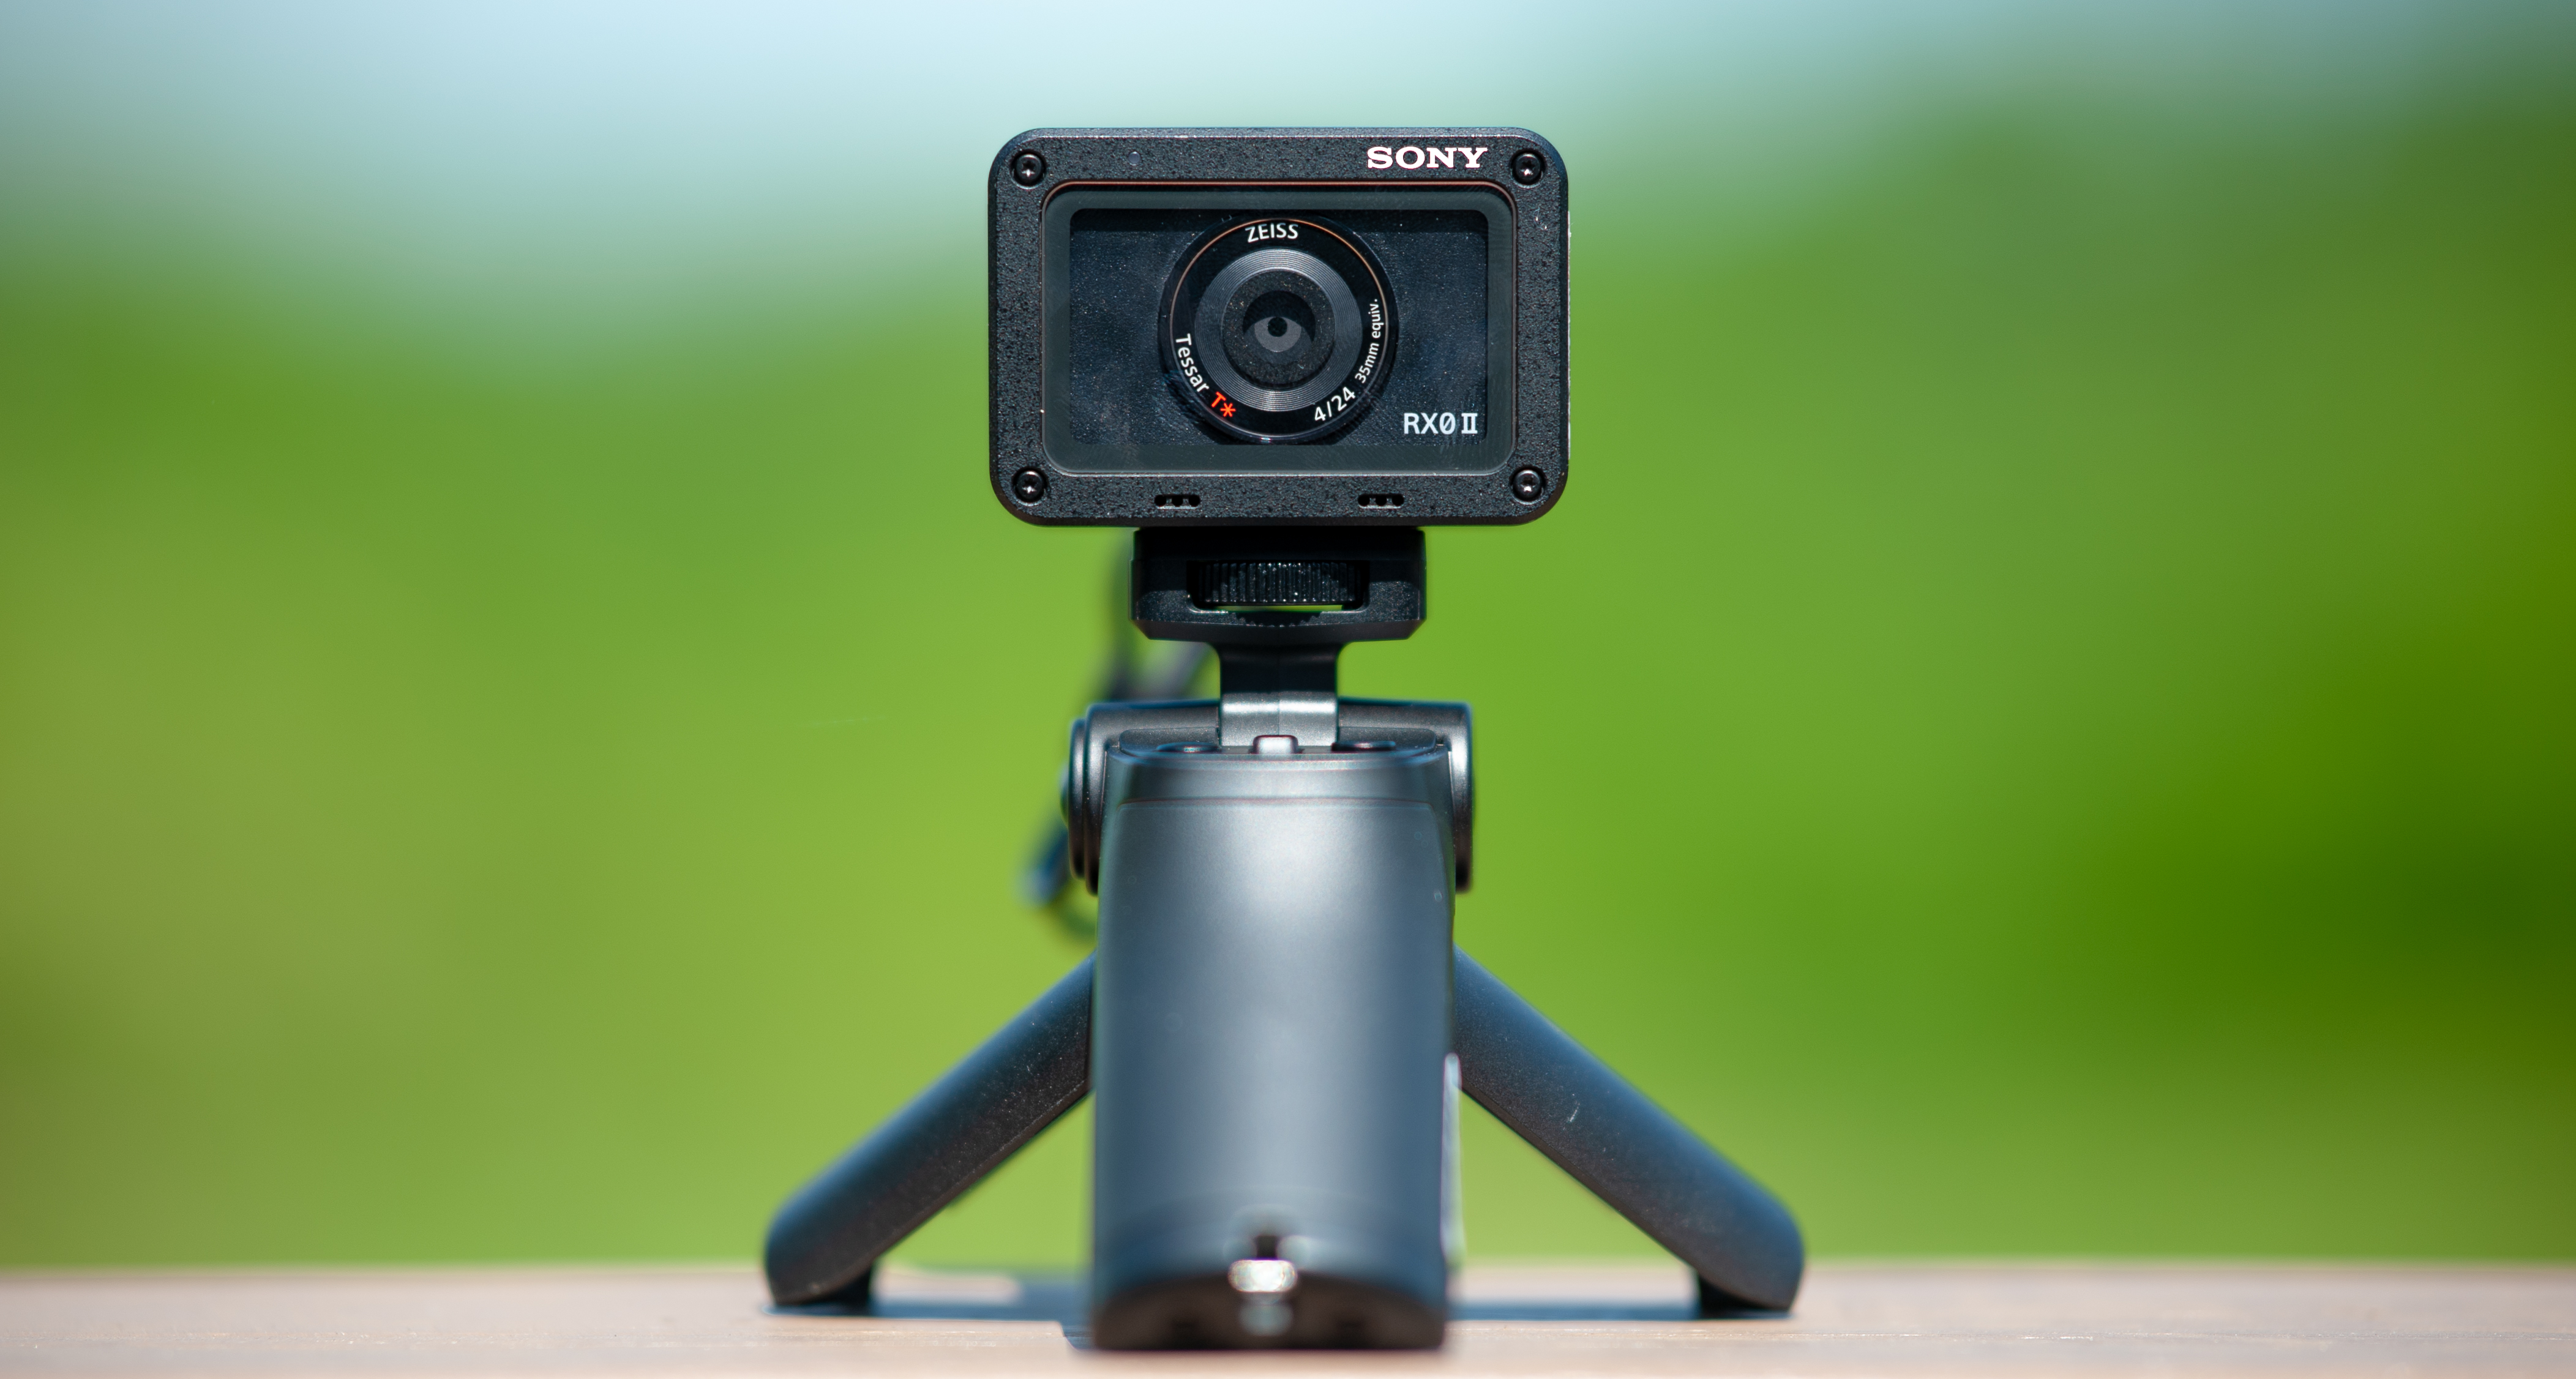 triple Bathtub Abrasive The Sony Cyber-Shot DSC-RX0 II Digital Camera Review